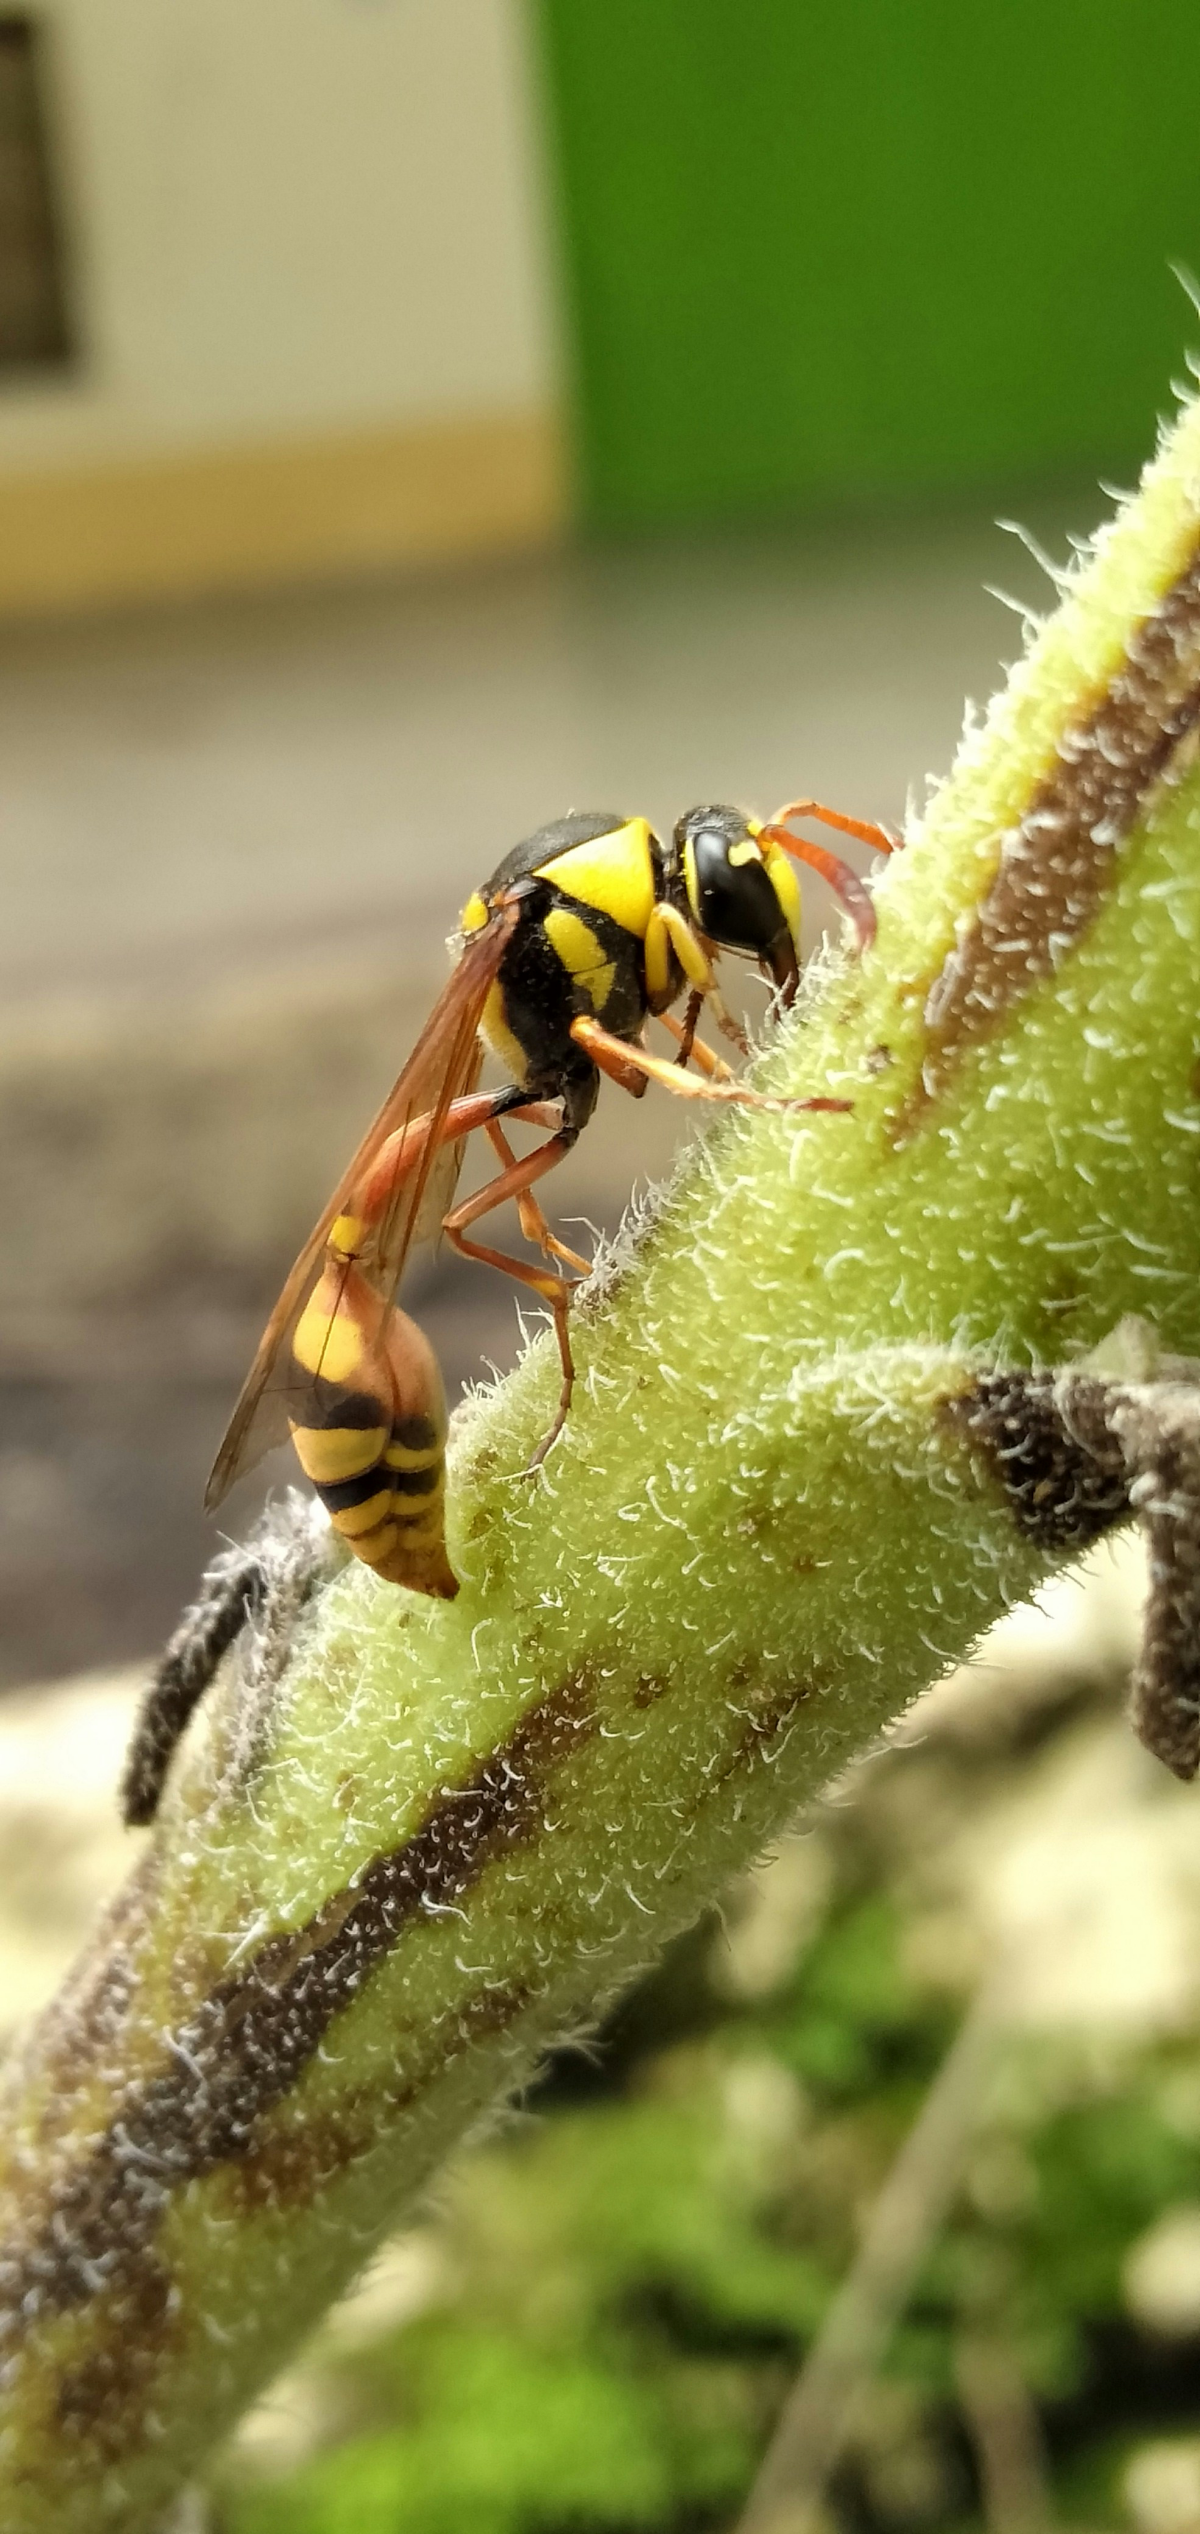 wasp on plant stem